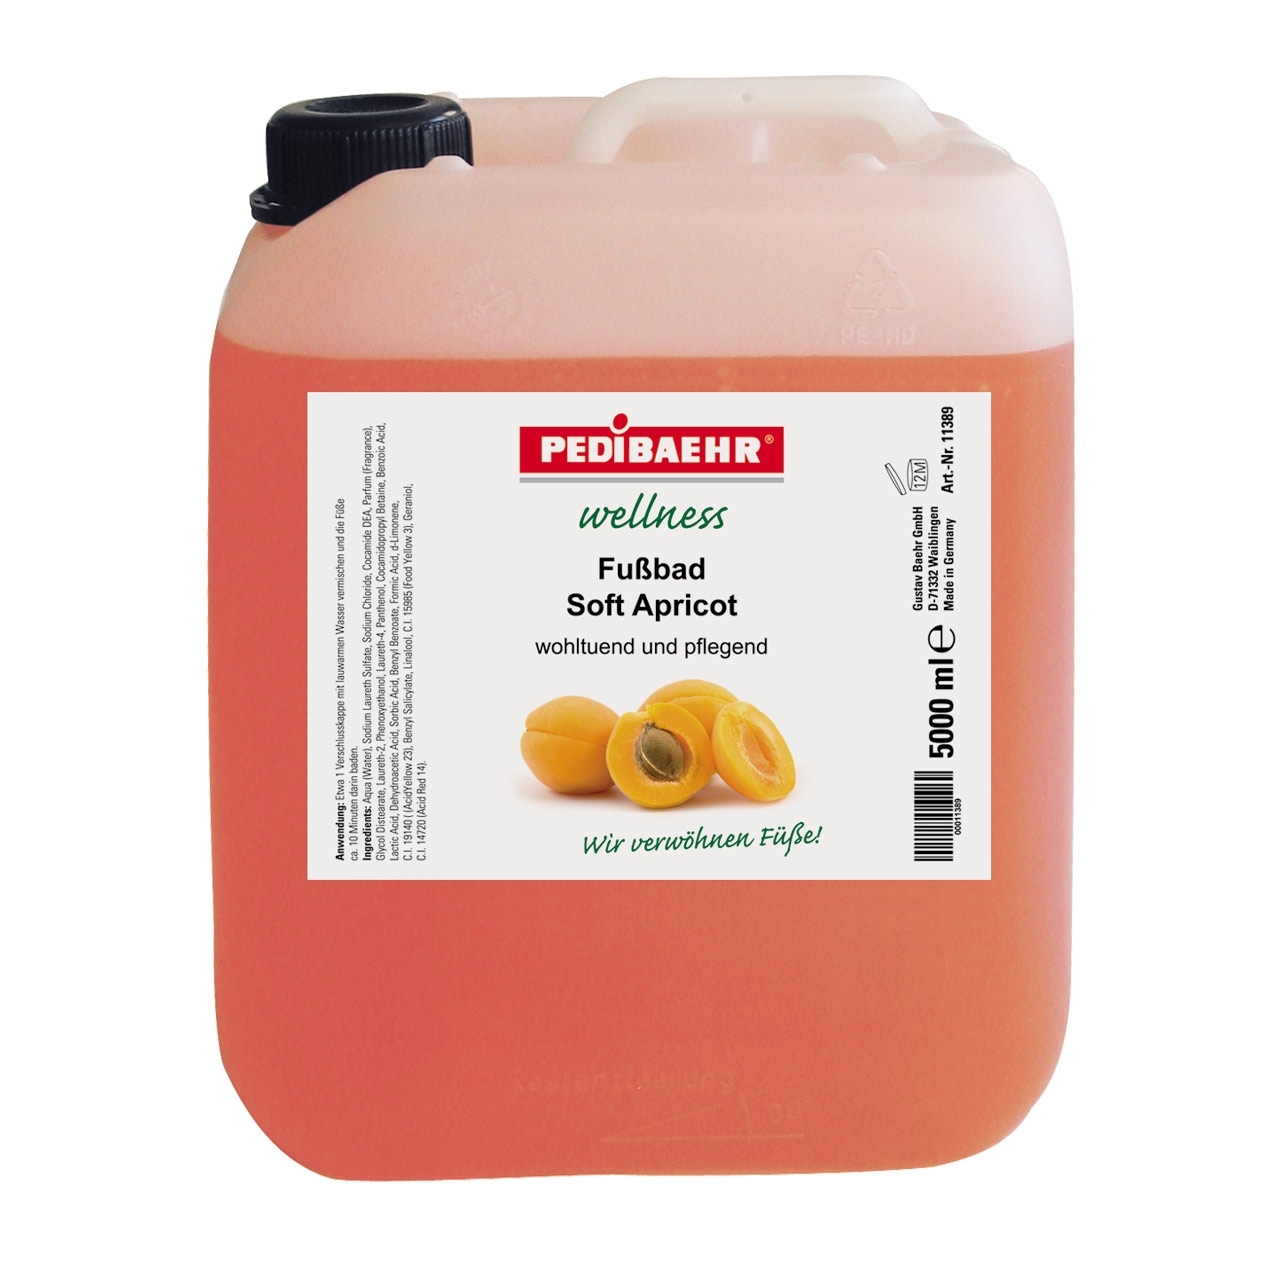 PEDIBAEHR Wellness Duft-Fußbad Soft Apricot 5000 ml